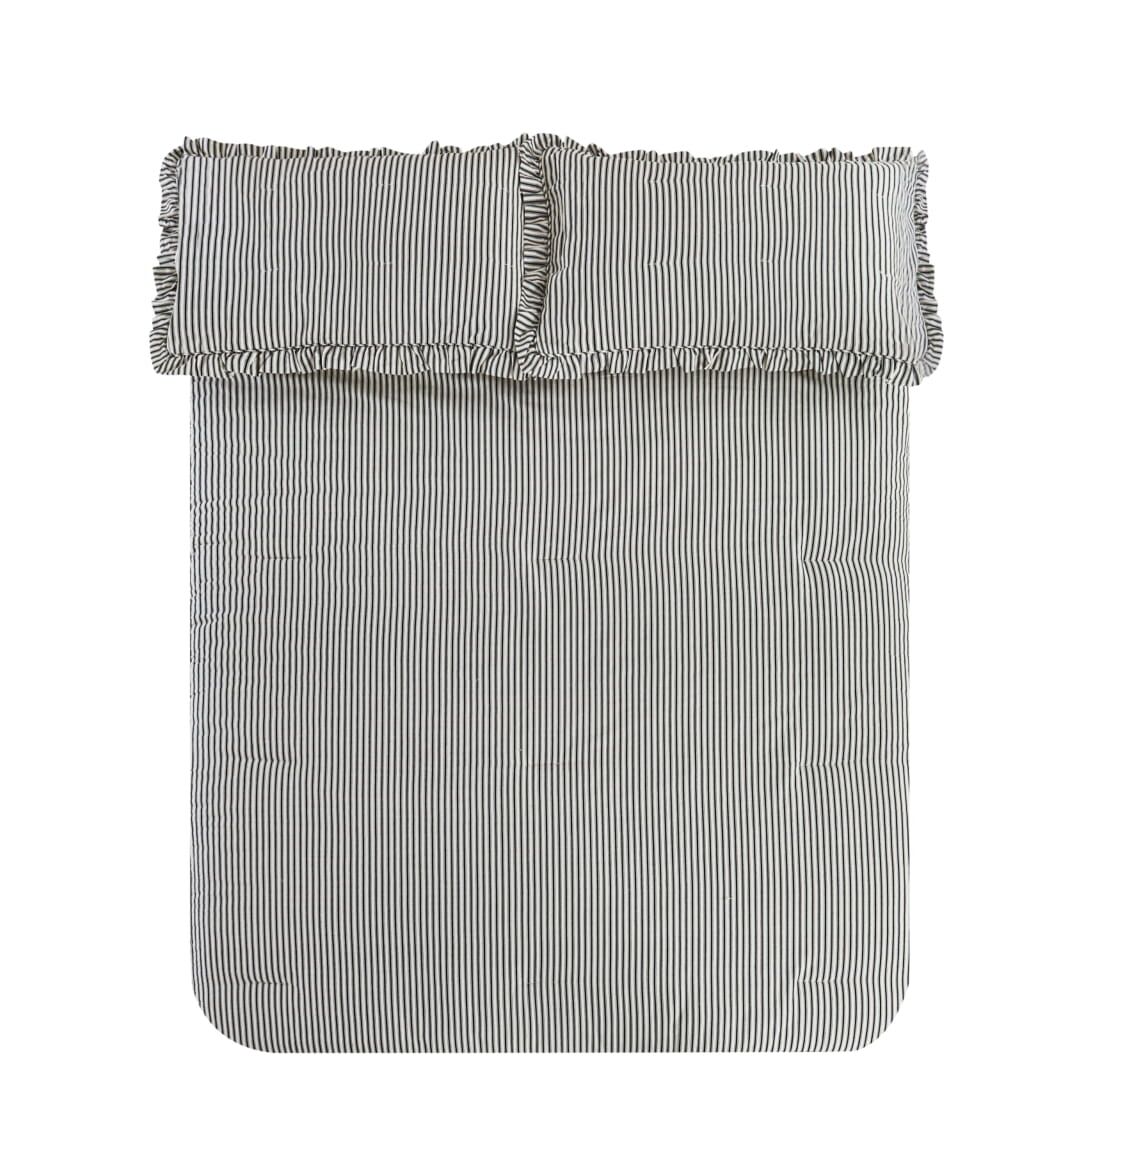 2489102bsp-blk-eco 3 Piece Toile Stripe Bedspread Set, Full Size